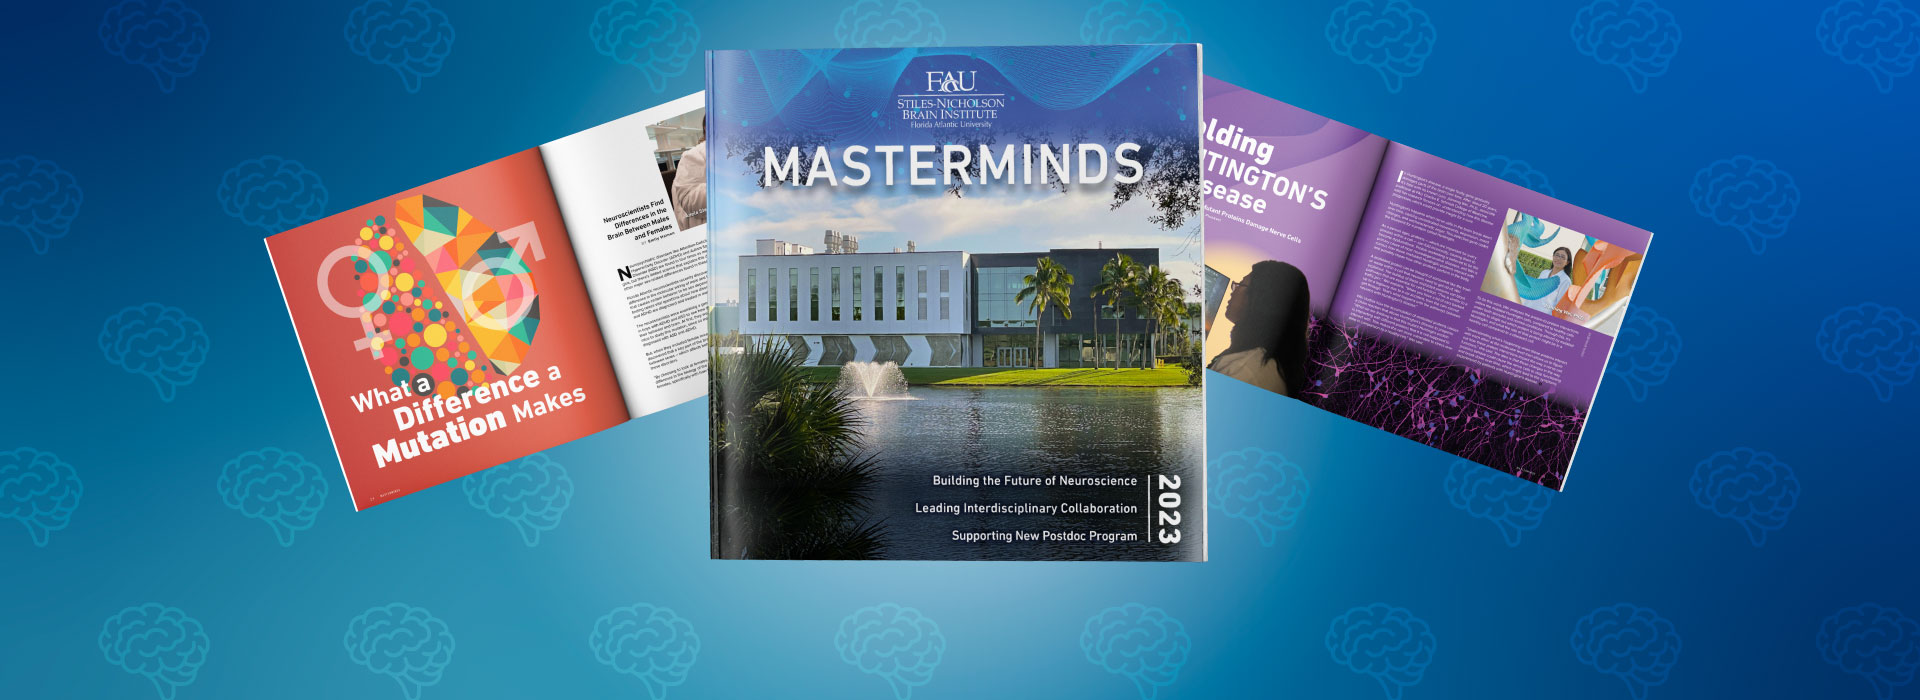 MasterMinds magazine cover